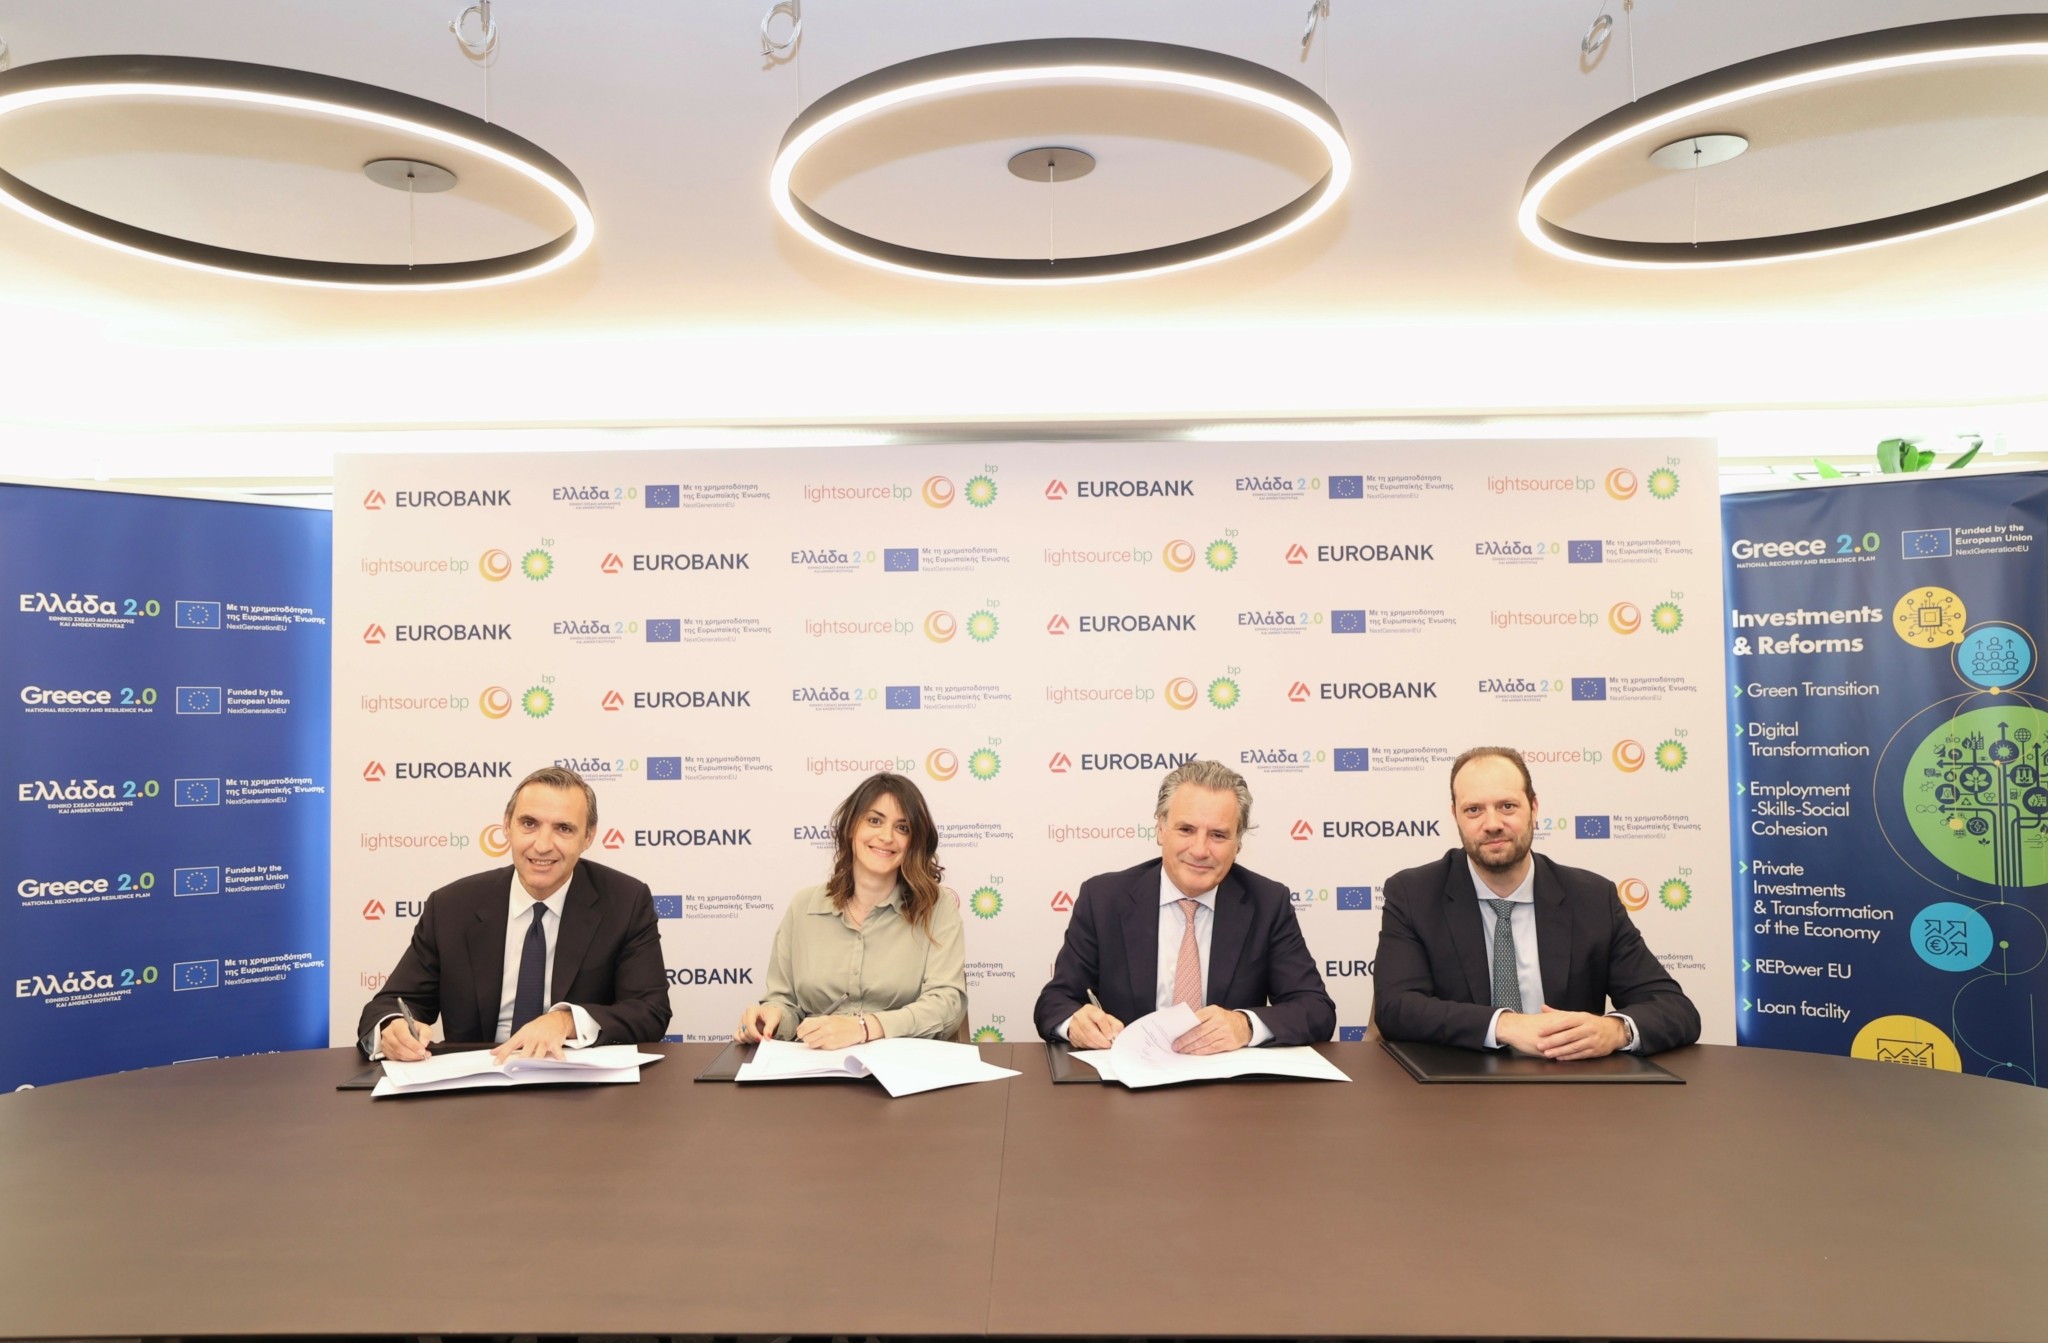 Eurobank – Ταμείο Ανάκαμψης: Υπέγραψαν σύμβαση χρηματοδότησης με την Lightsource bp για κατασκευή φωτοβολταϊκού σταθμού